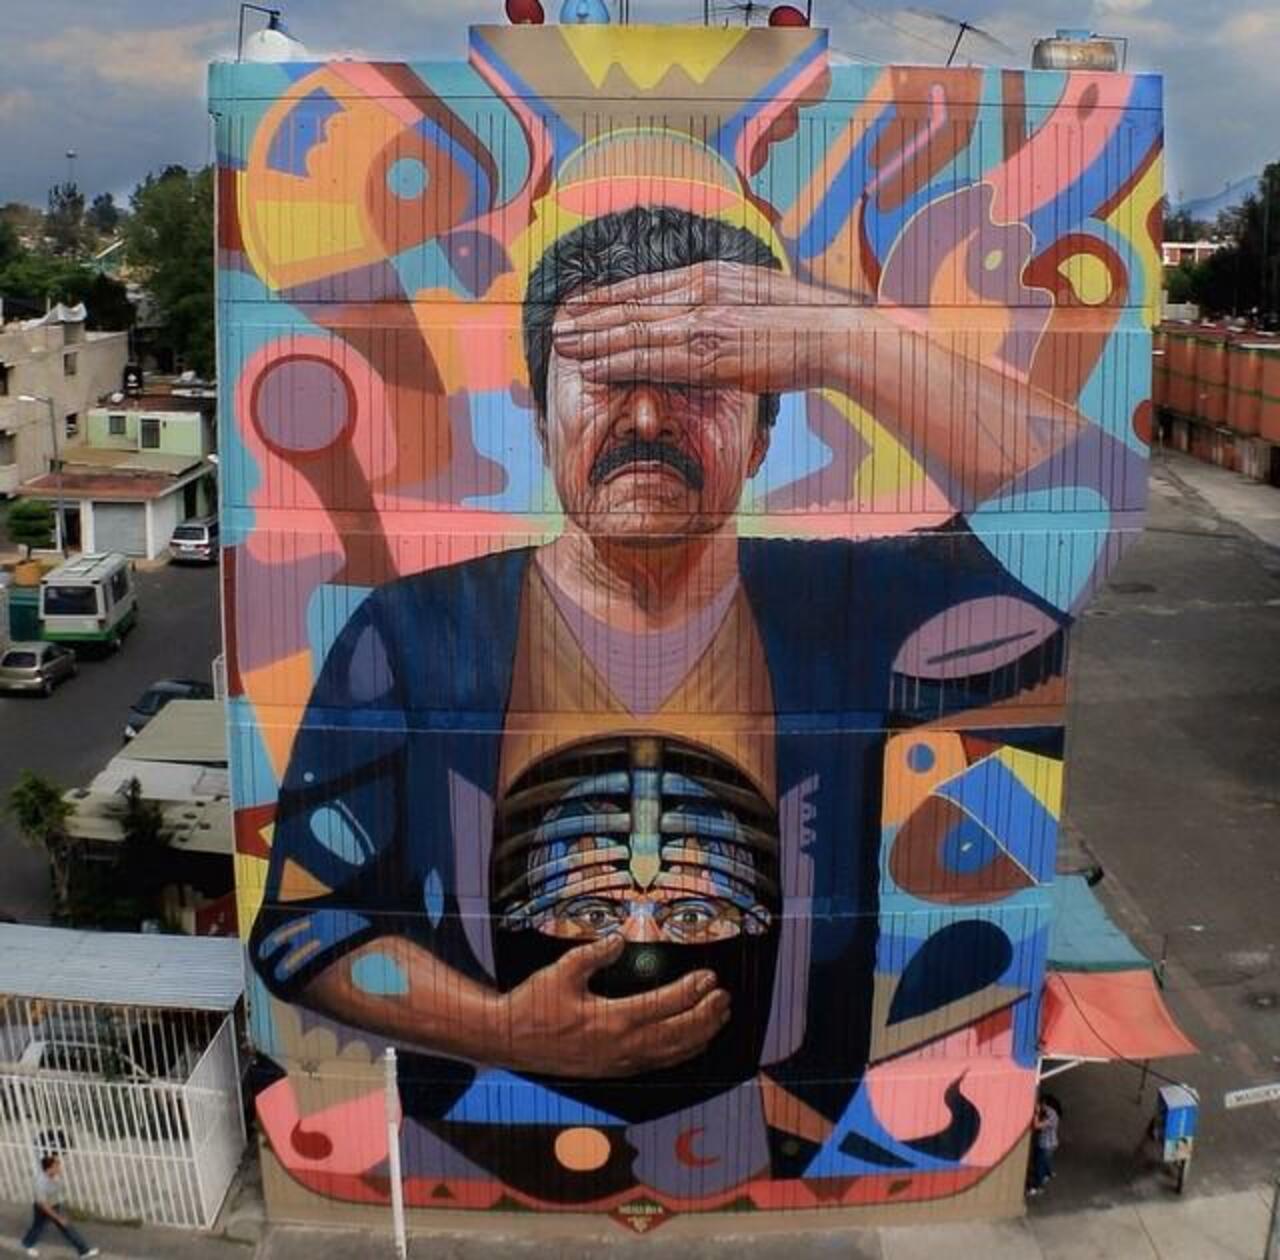 Large scale Street Art by the artist Daniel Cortez 

#art #mural #graffiti #streetart http://t.co/YJMGrIFNvX